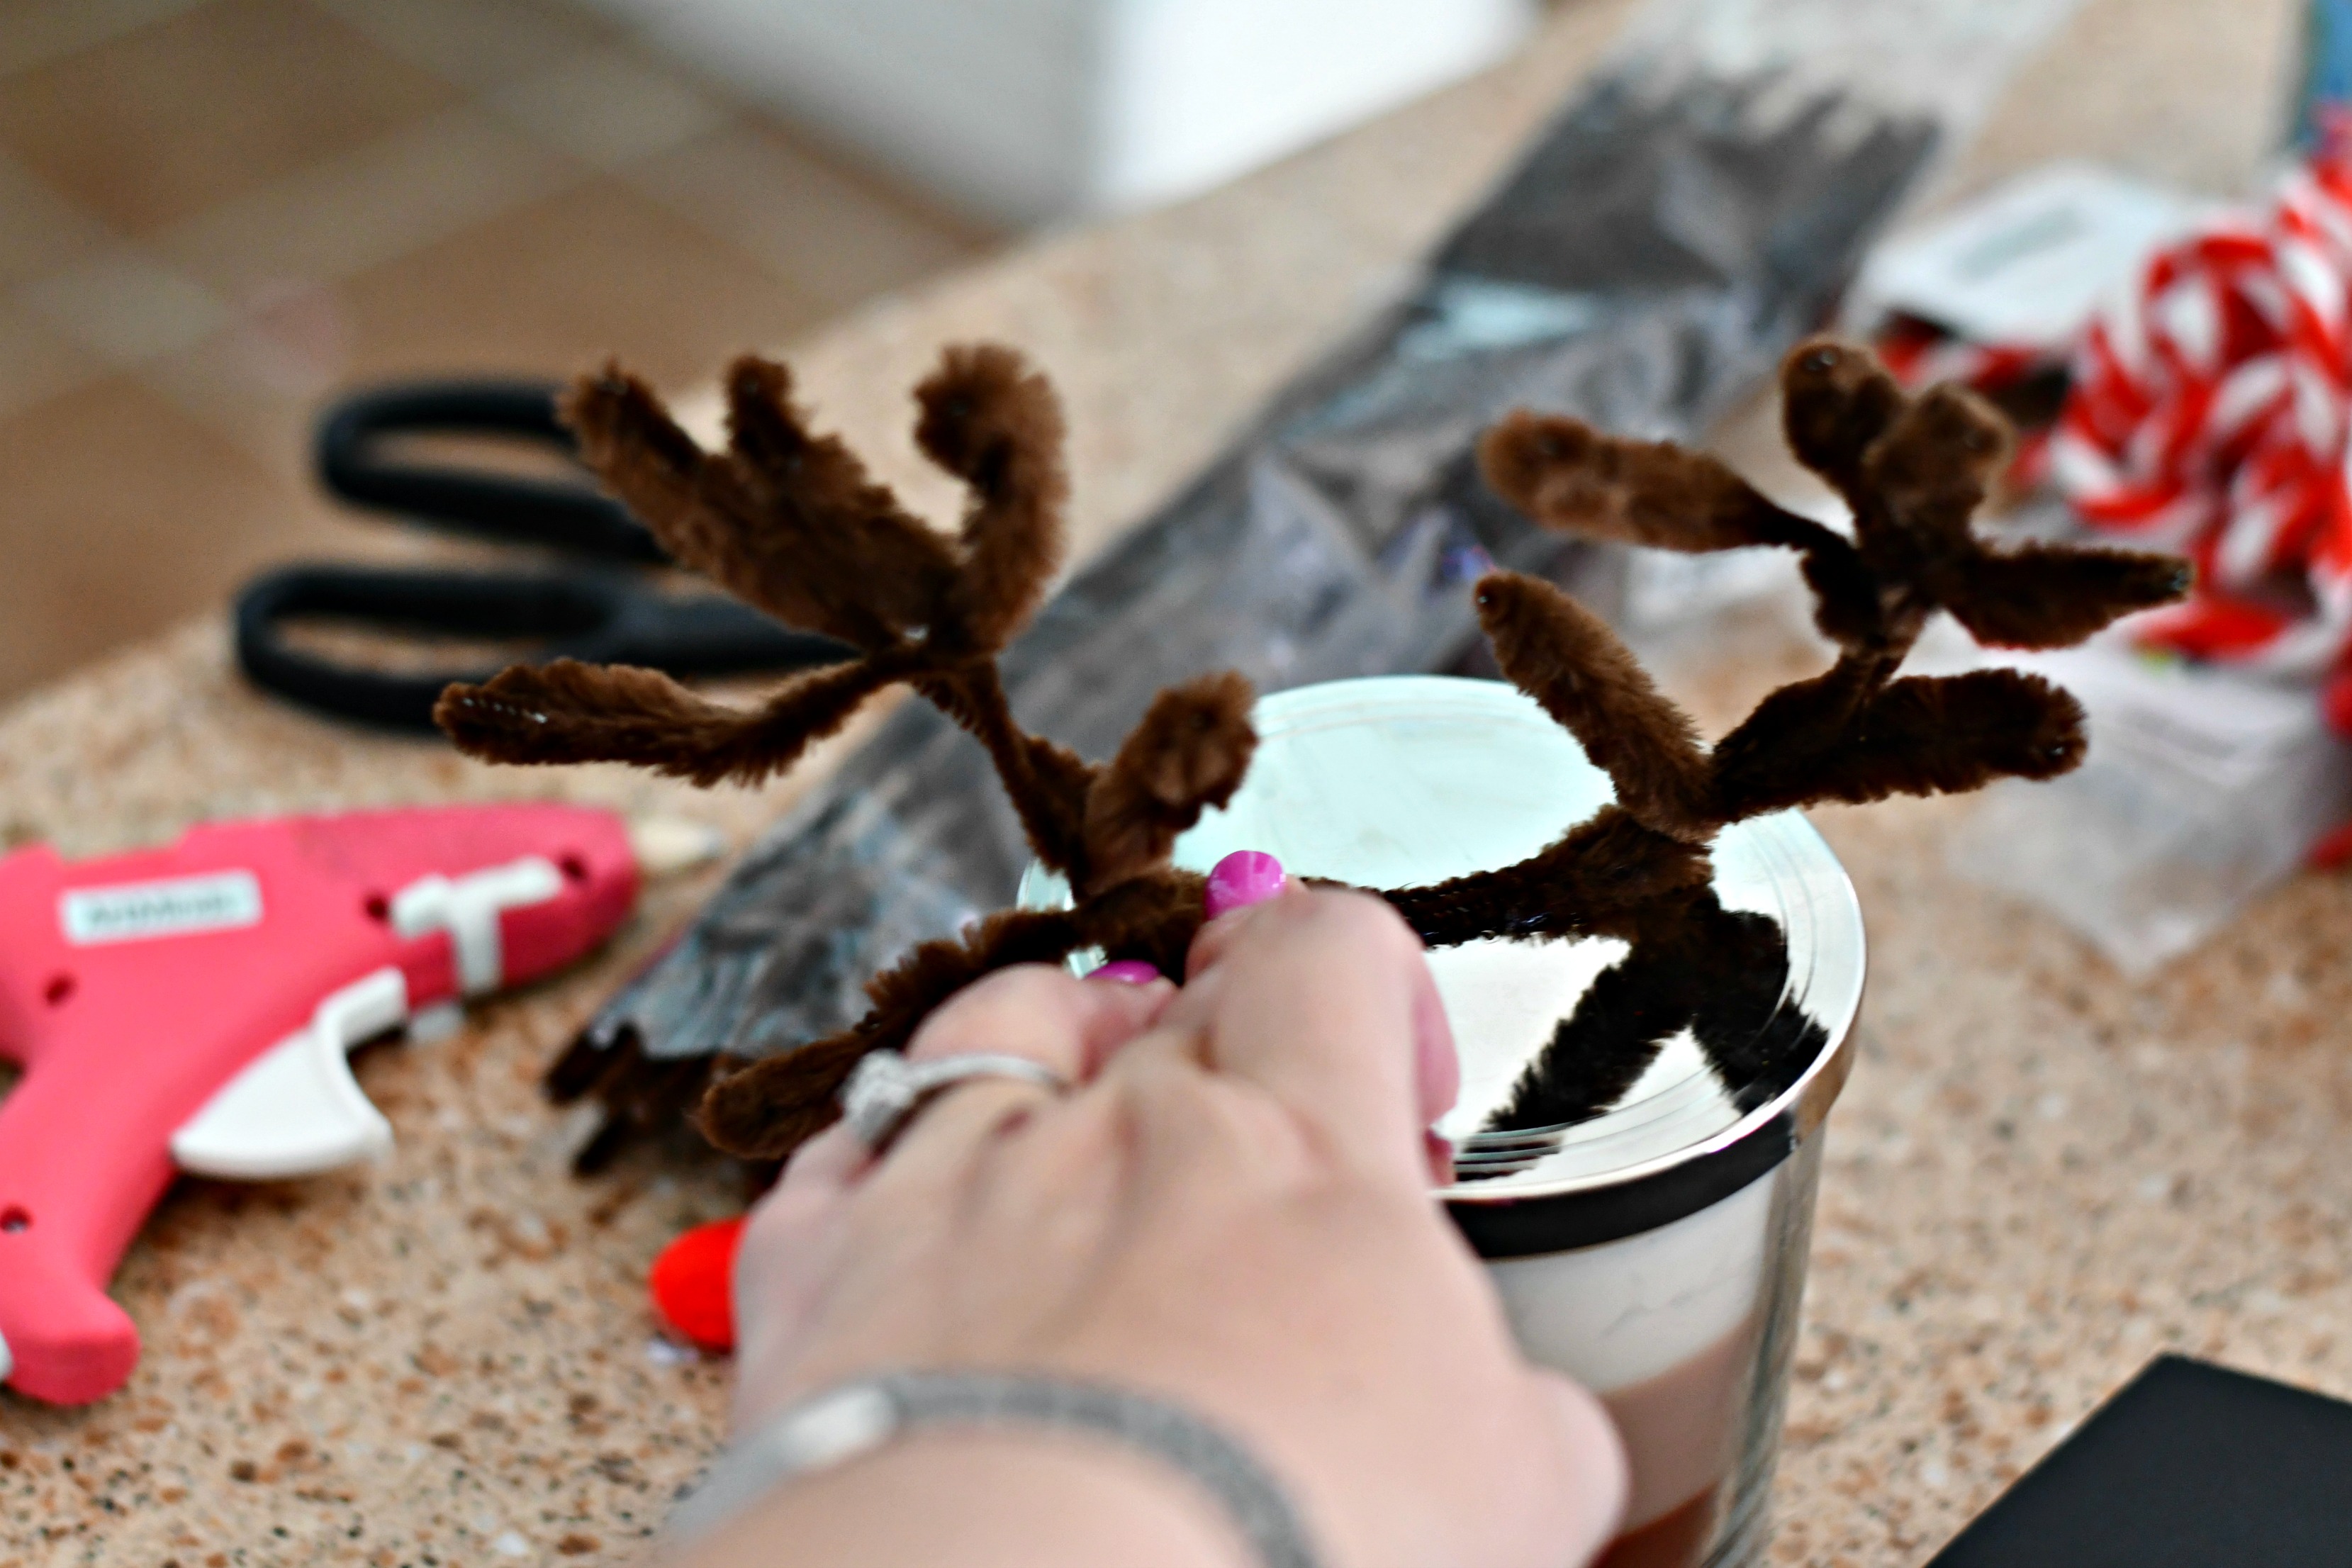  Adding reindeer antlers